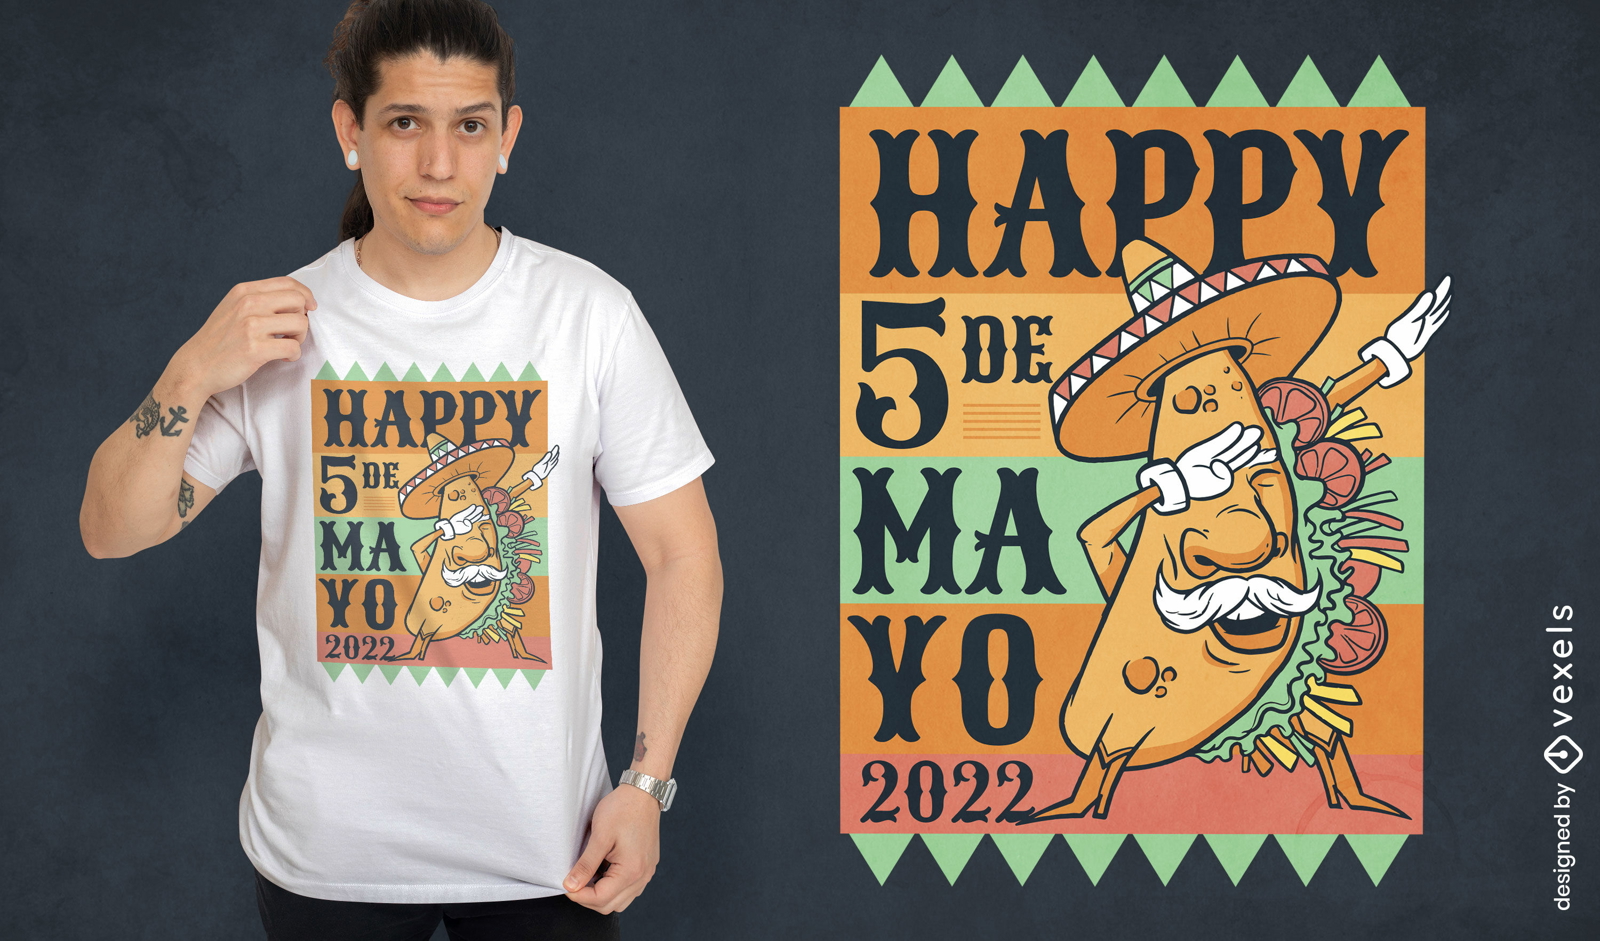 Taco mexican food dabbing t-shirt design